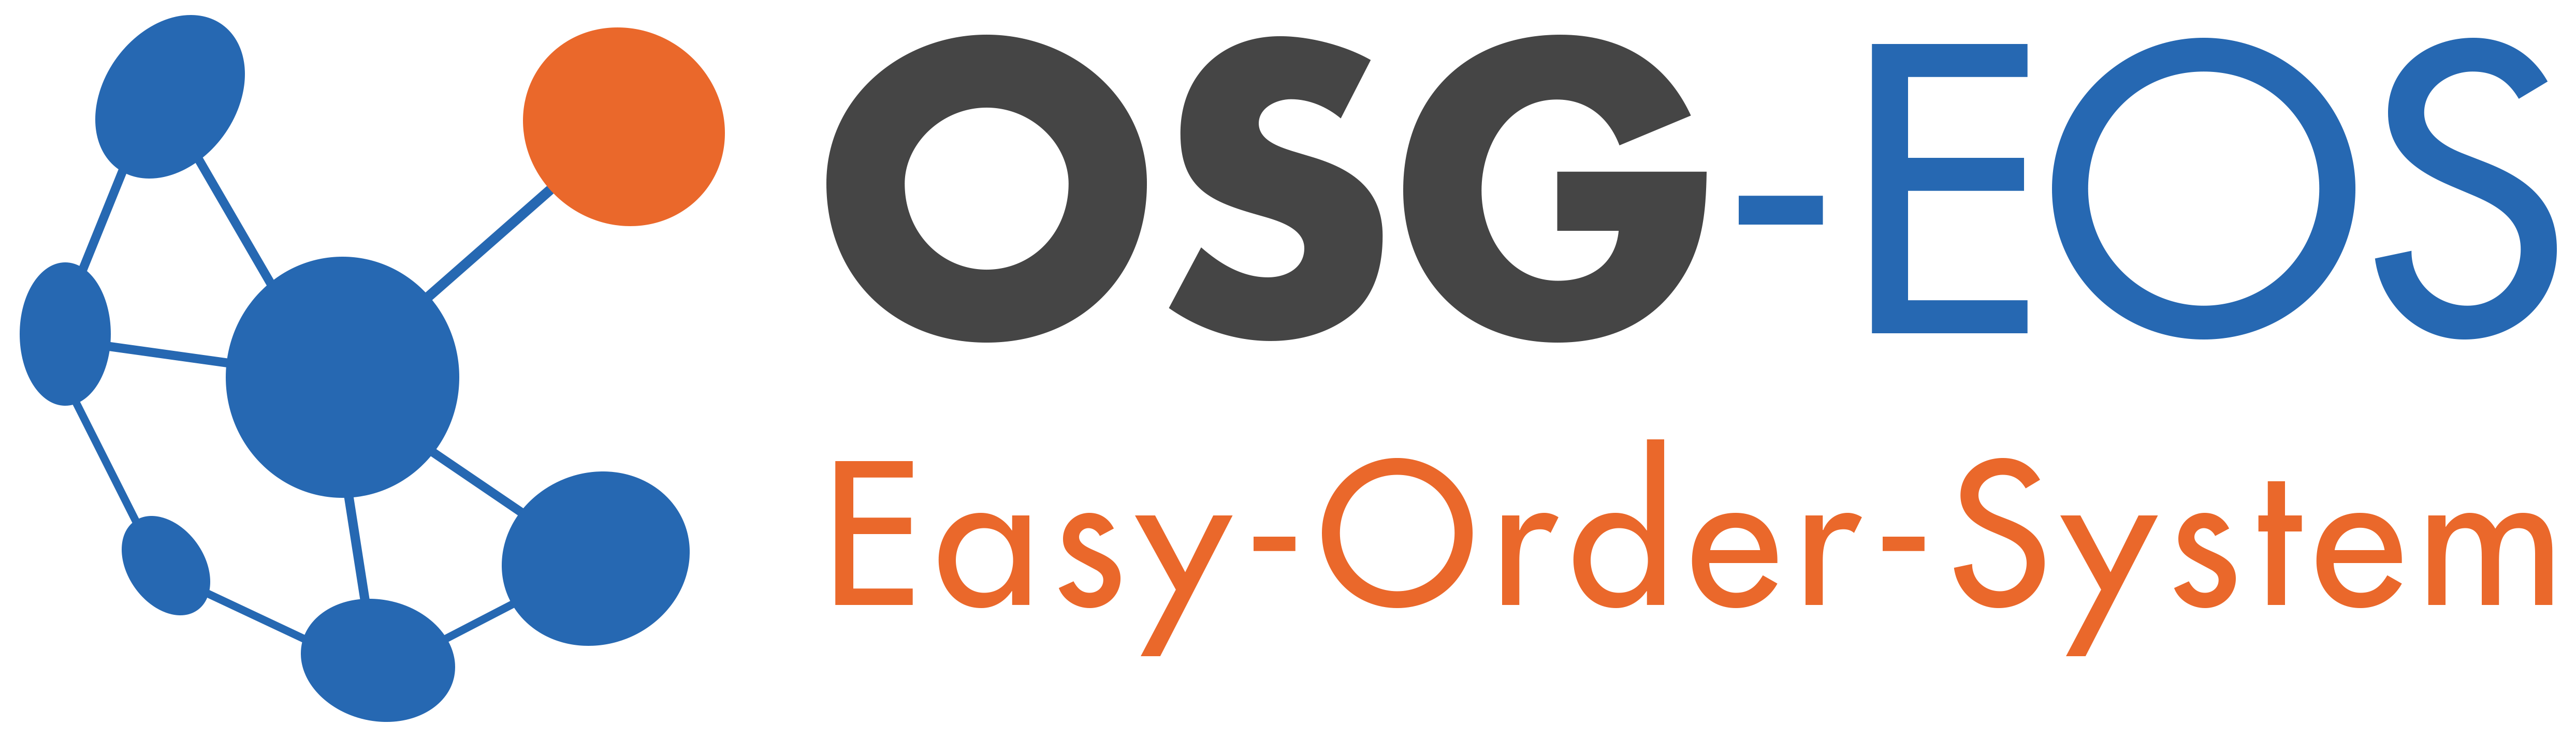 OSG-EOS Logo